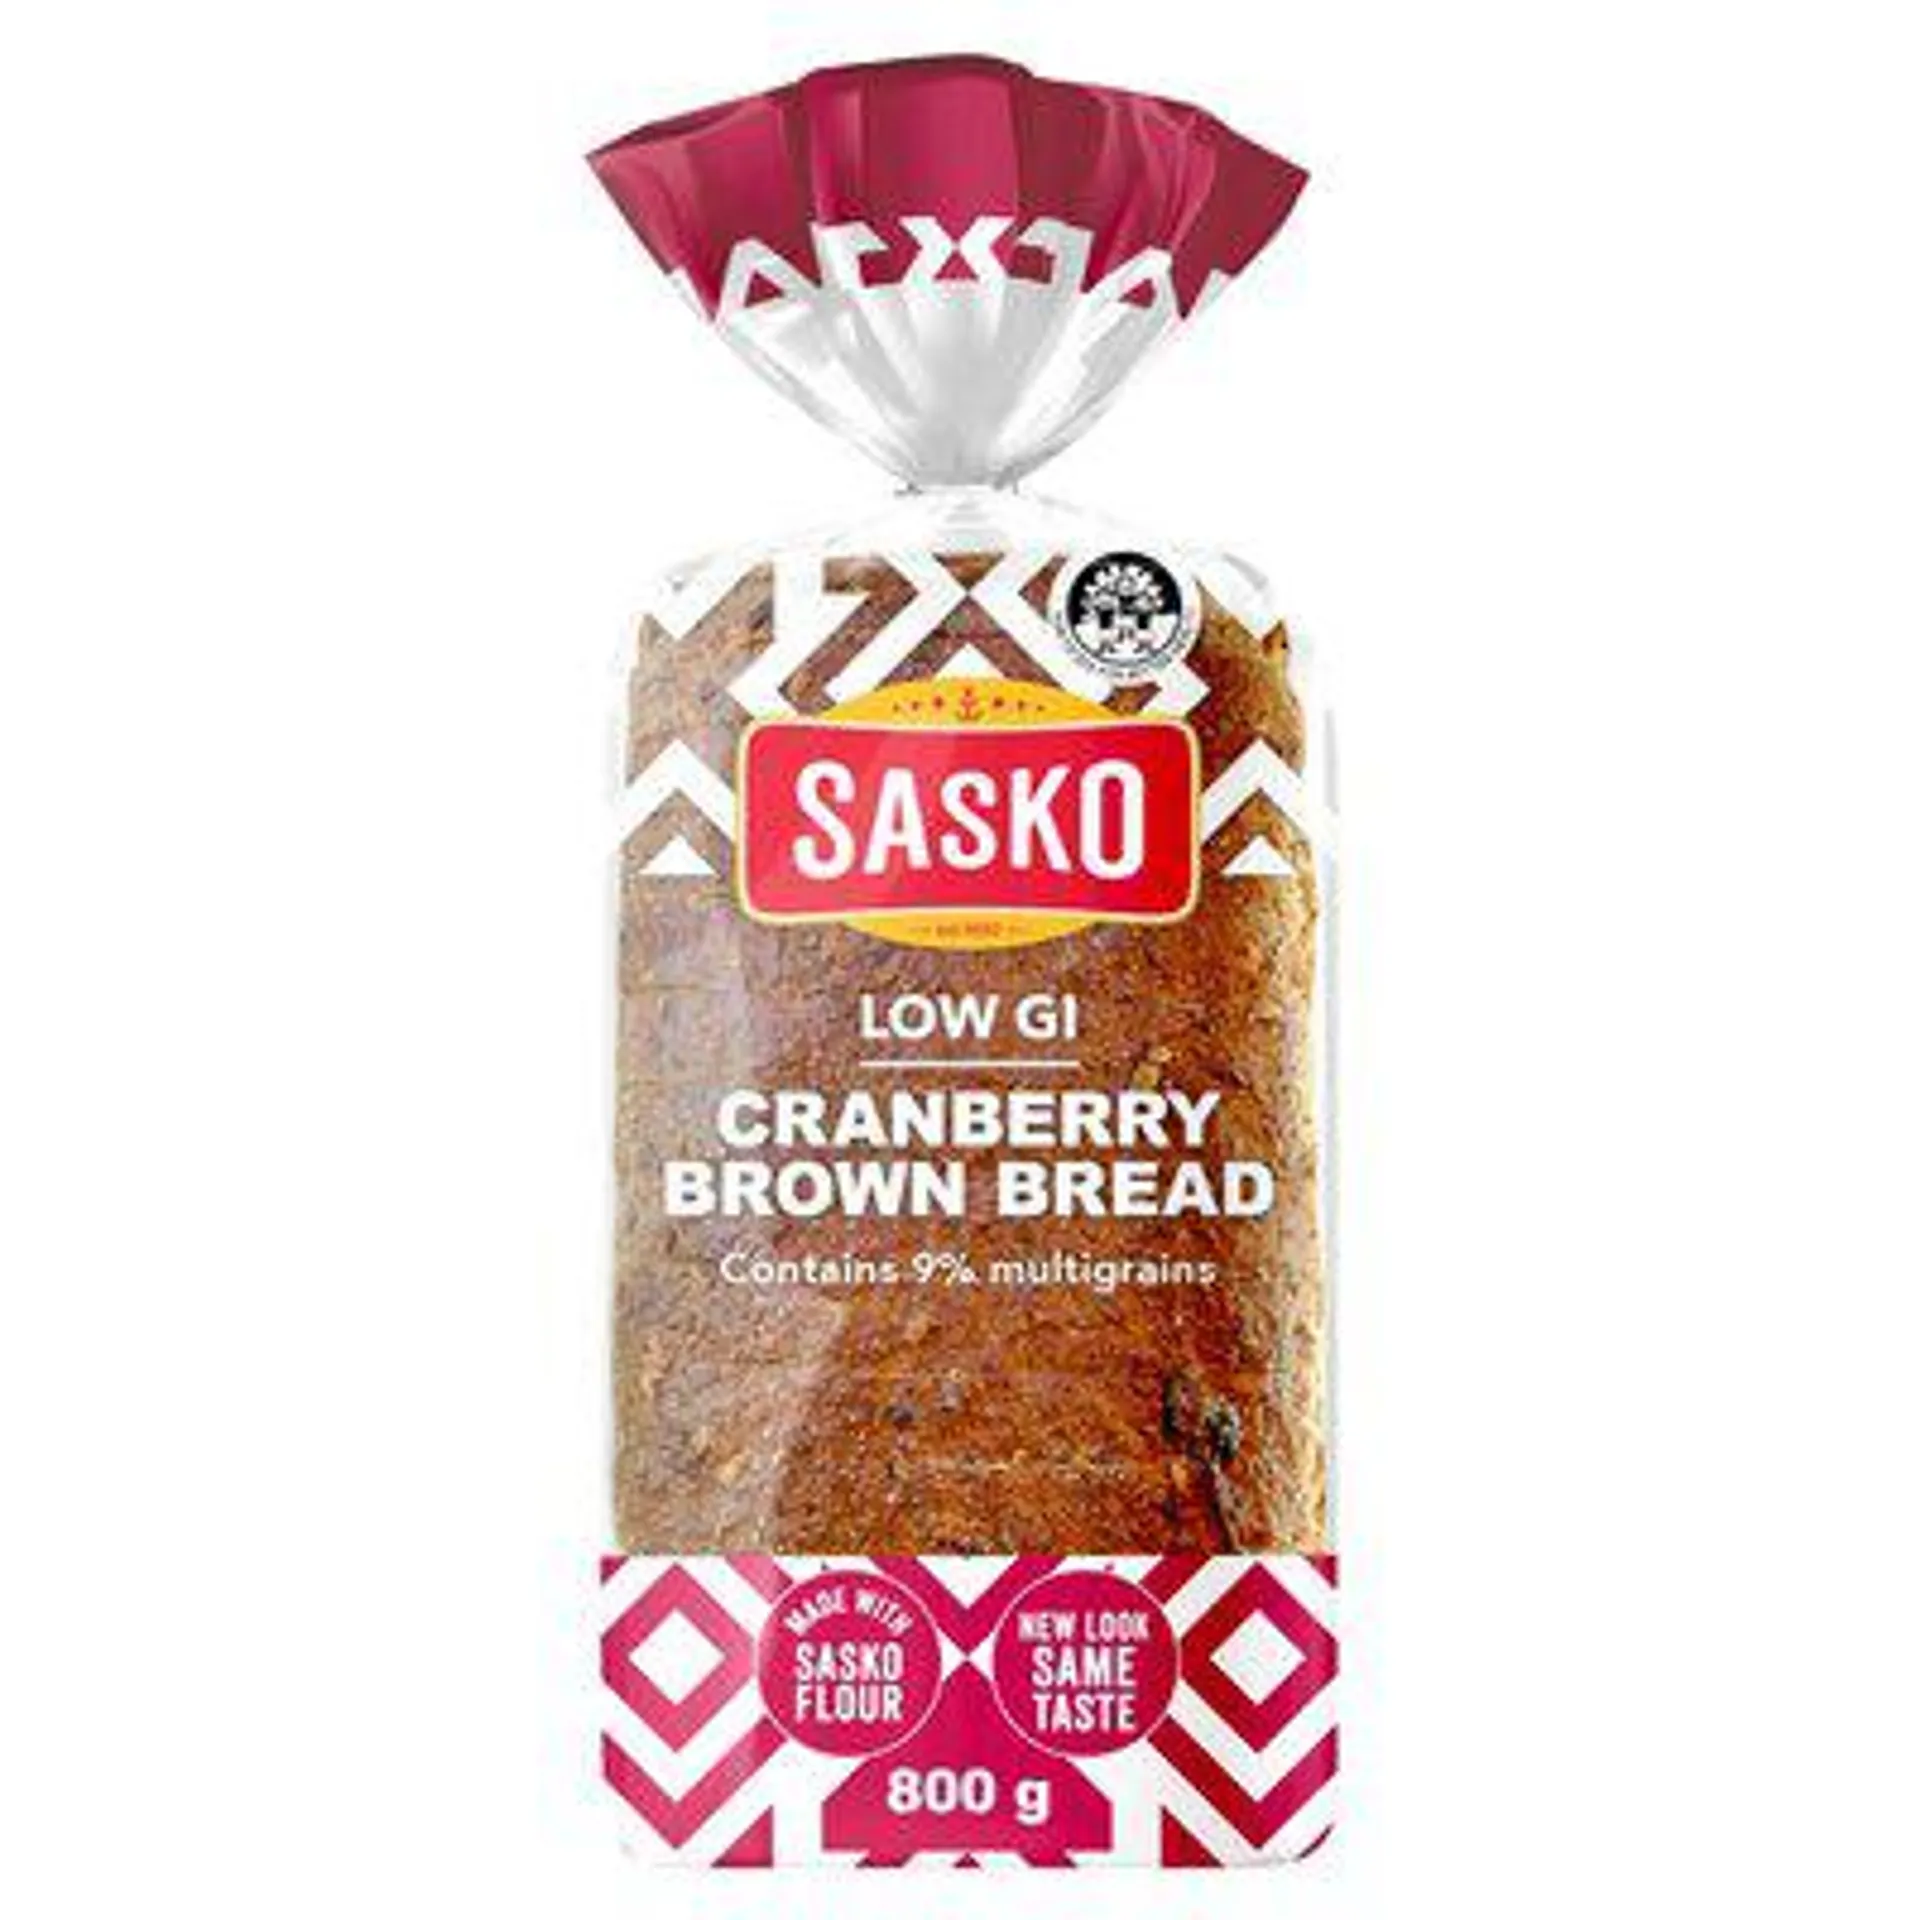 Sasko Low Gi Cranberry Brown Bread 800g